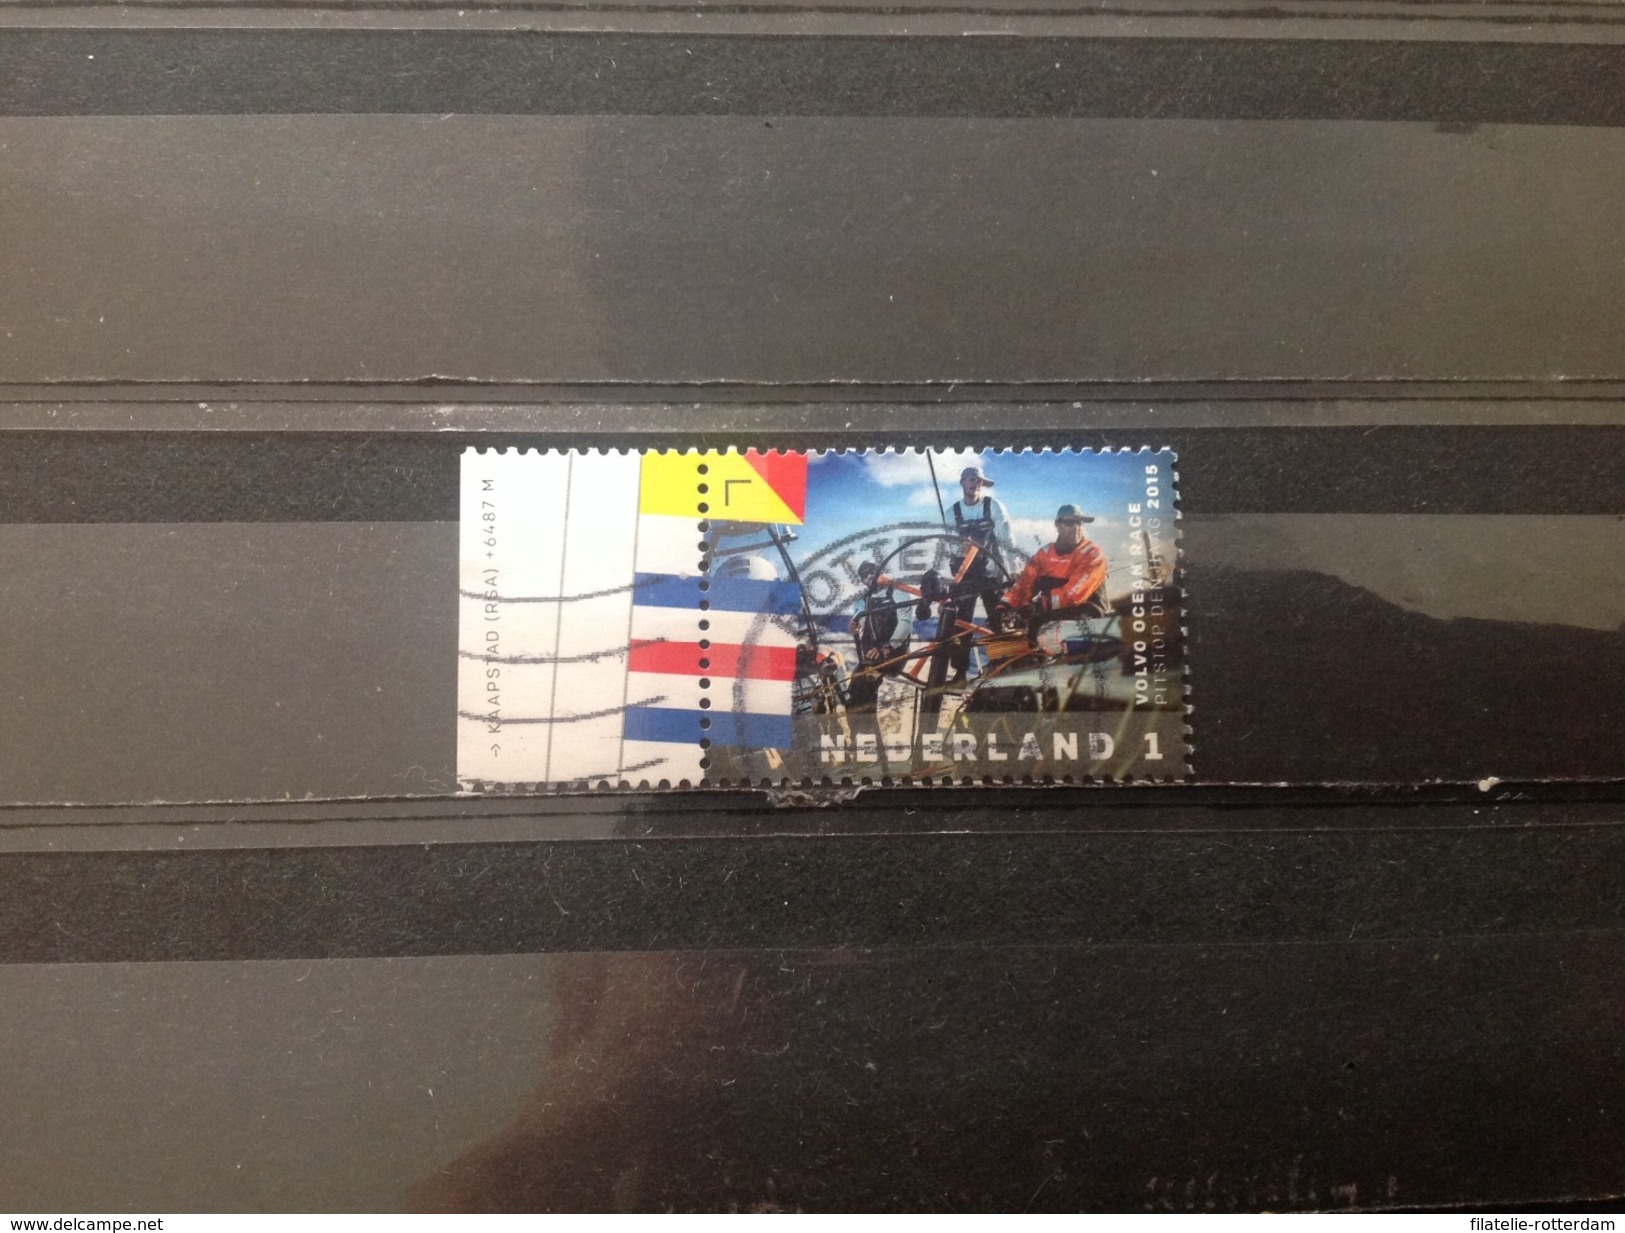 Nederland / The Netherlands - Volvo Ocean Race 2015 - Used Stamps